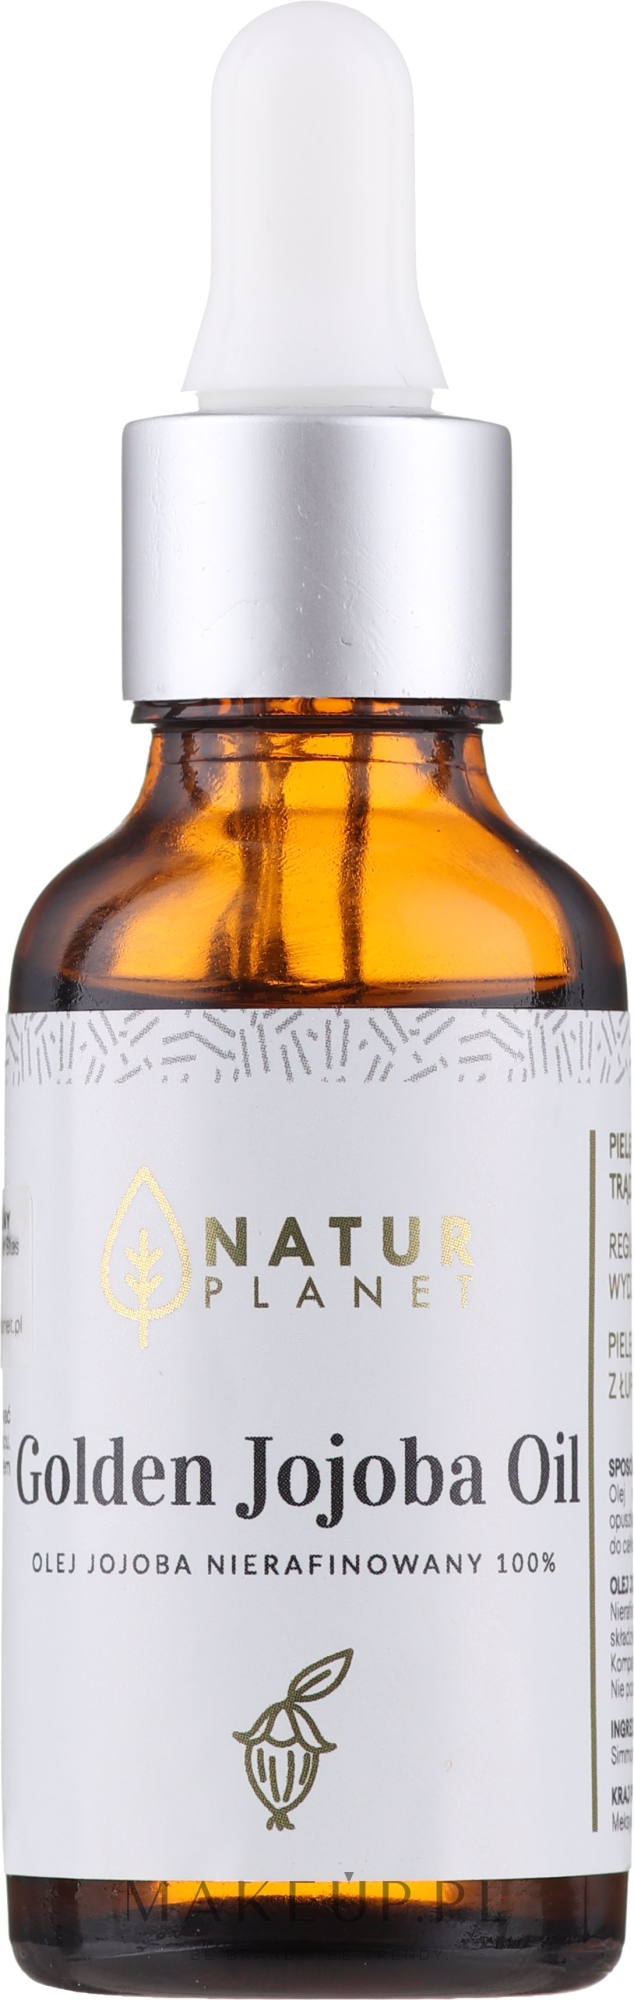 100% organiczny olej jojoba Golden - Natur Planet Jojoba Organic Oil 100% — фото 30 ml